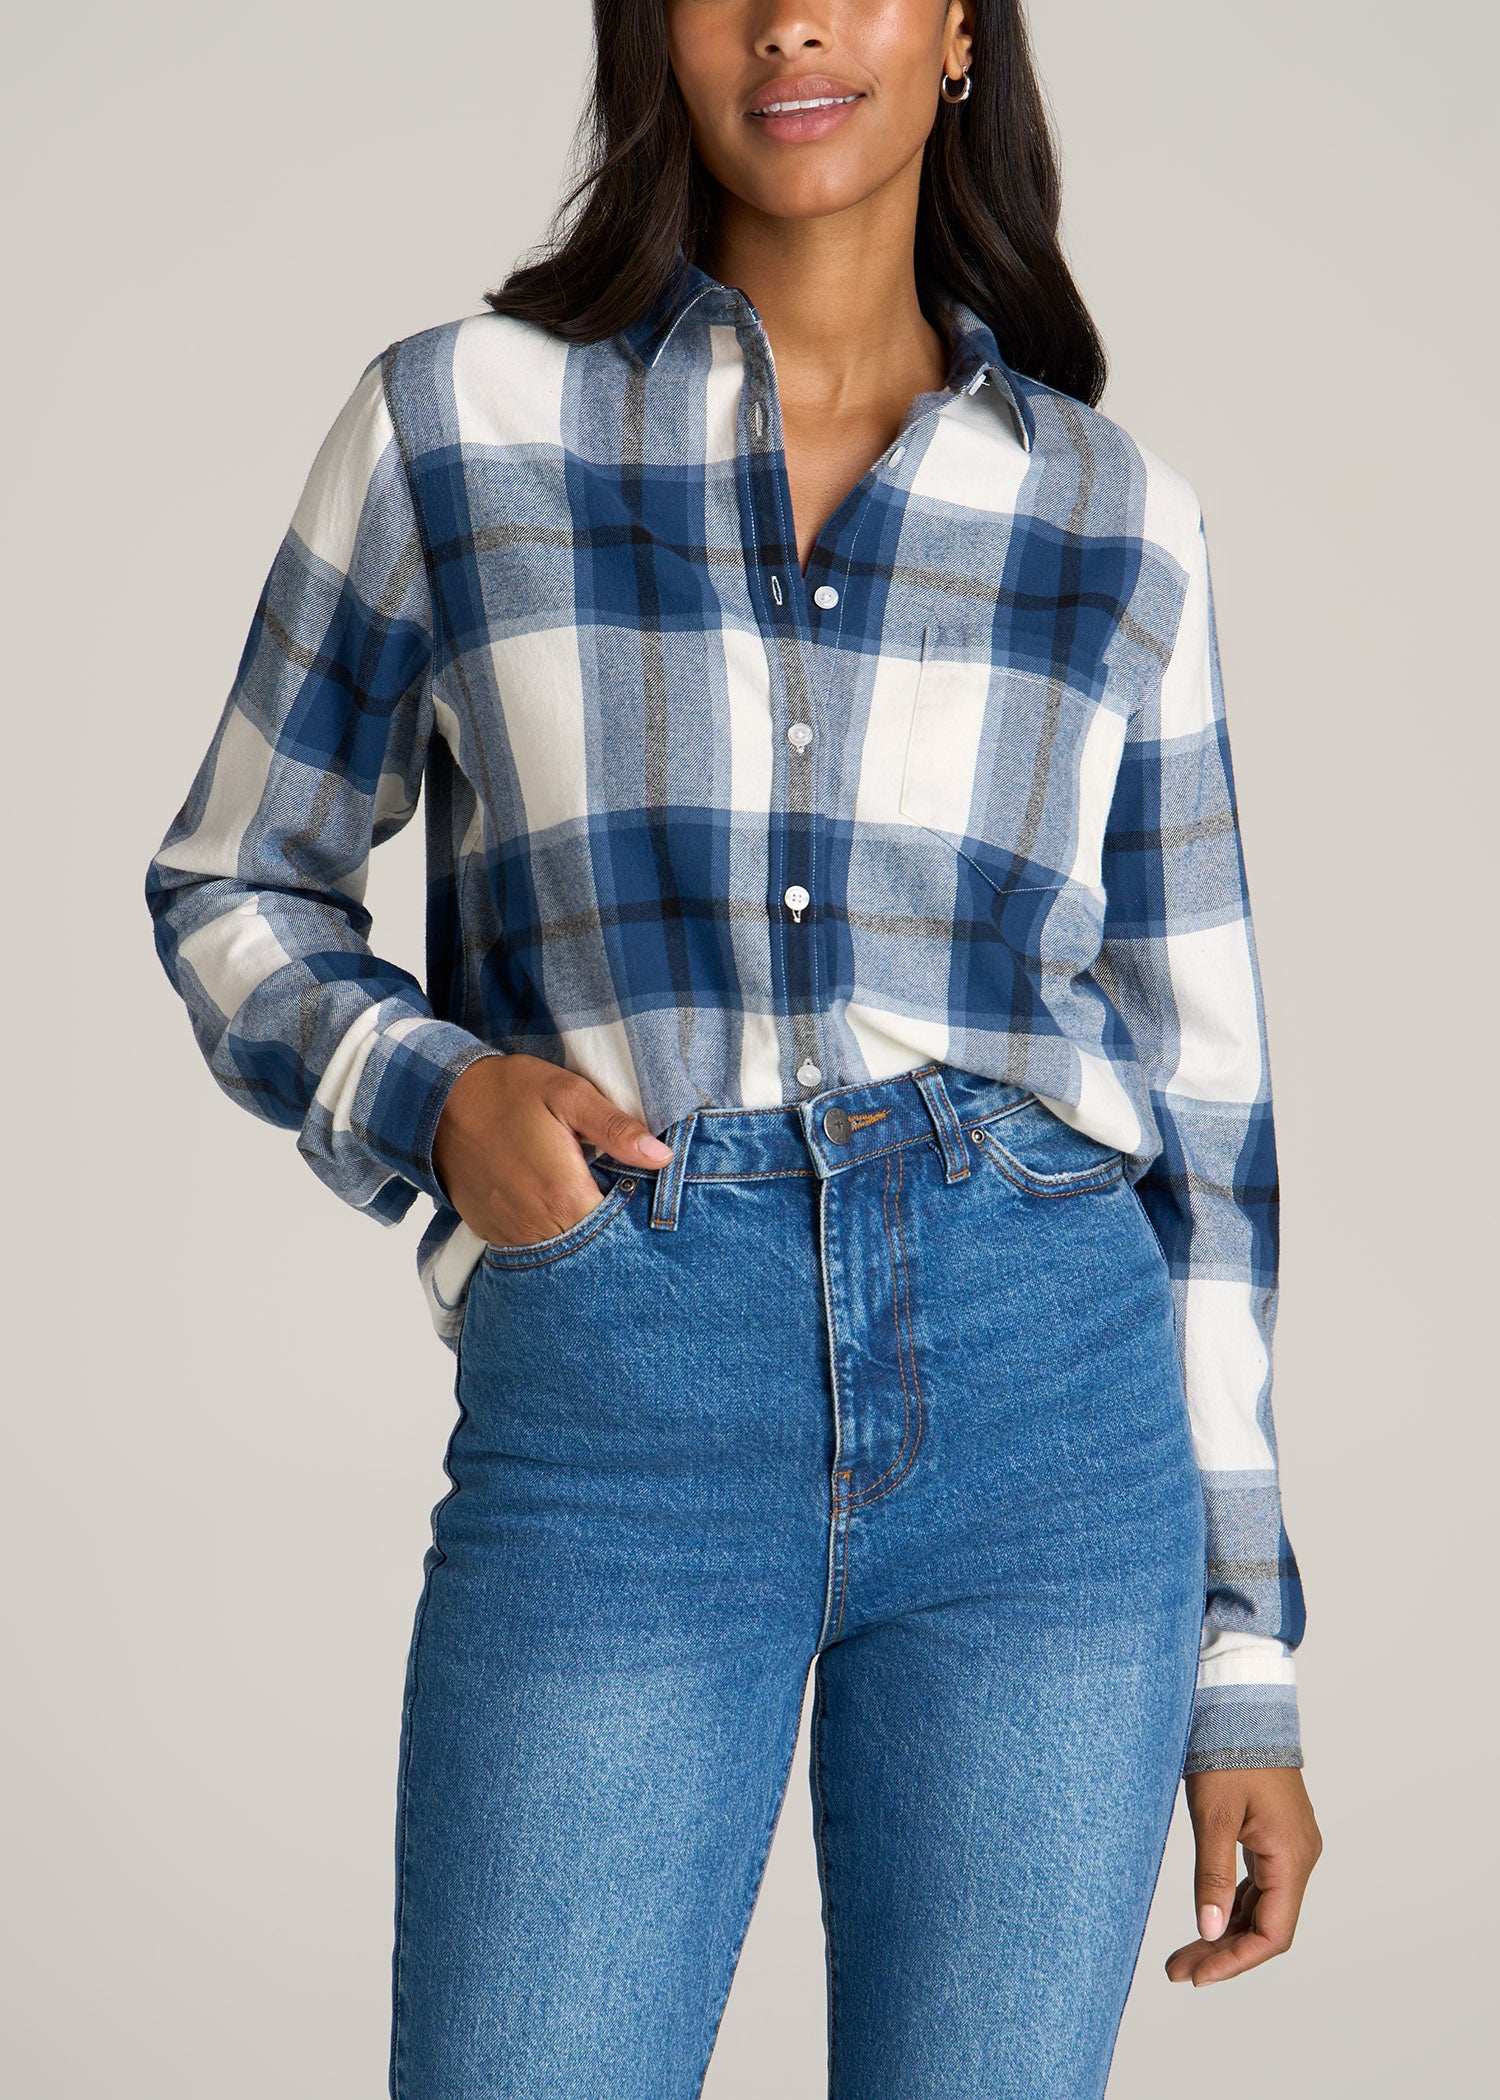 American-Tall-Women-Flannel-Button-up-Shirt-Oean-Blue-Navy-front